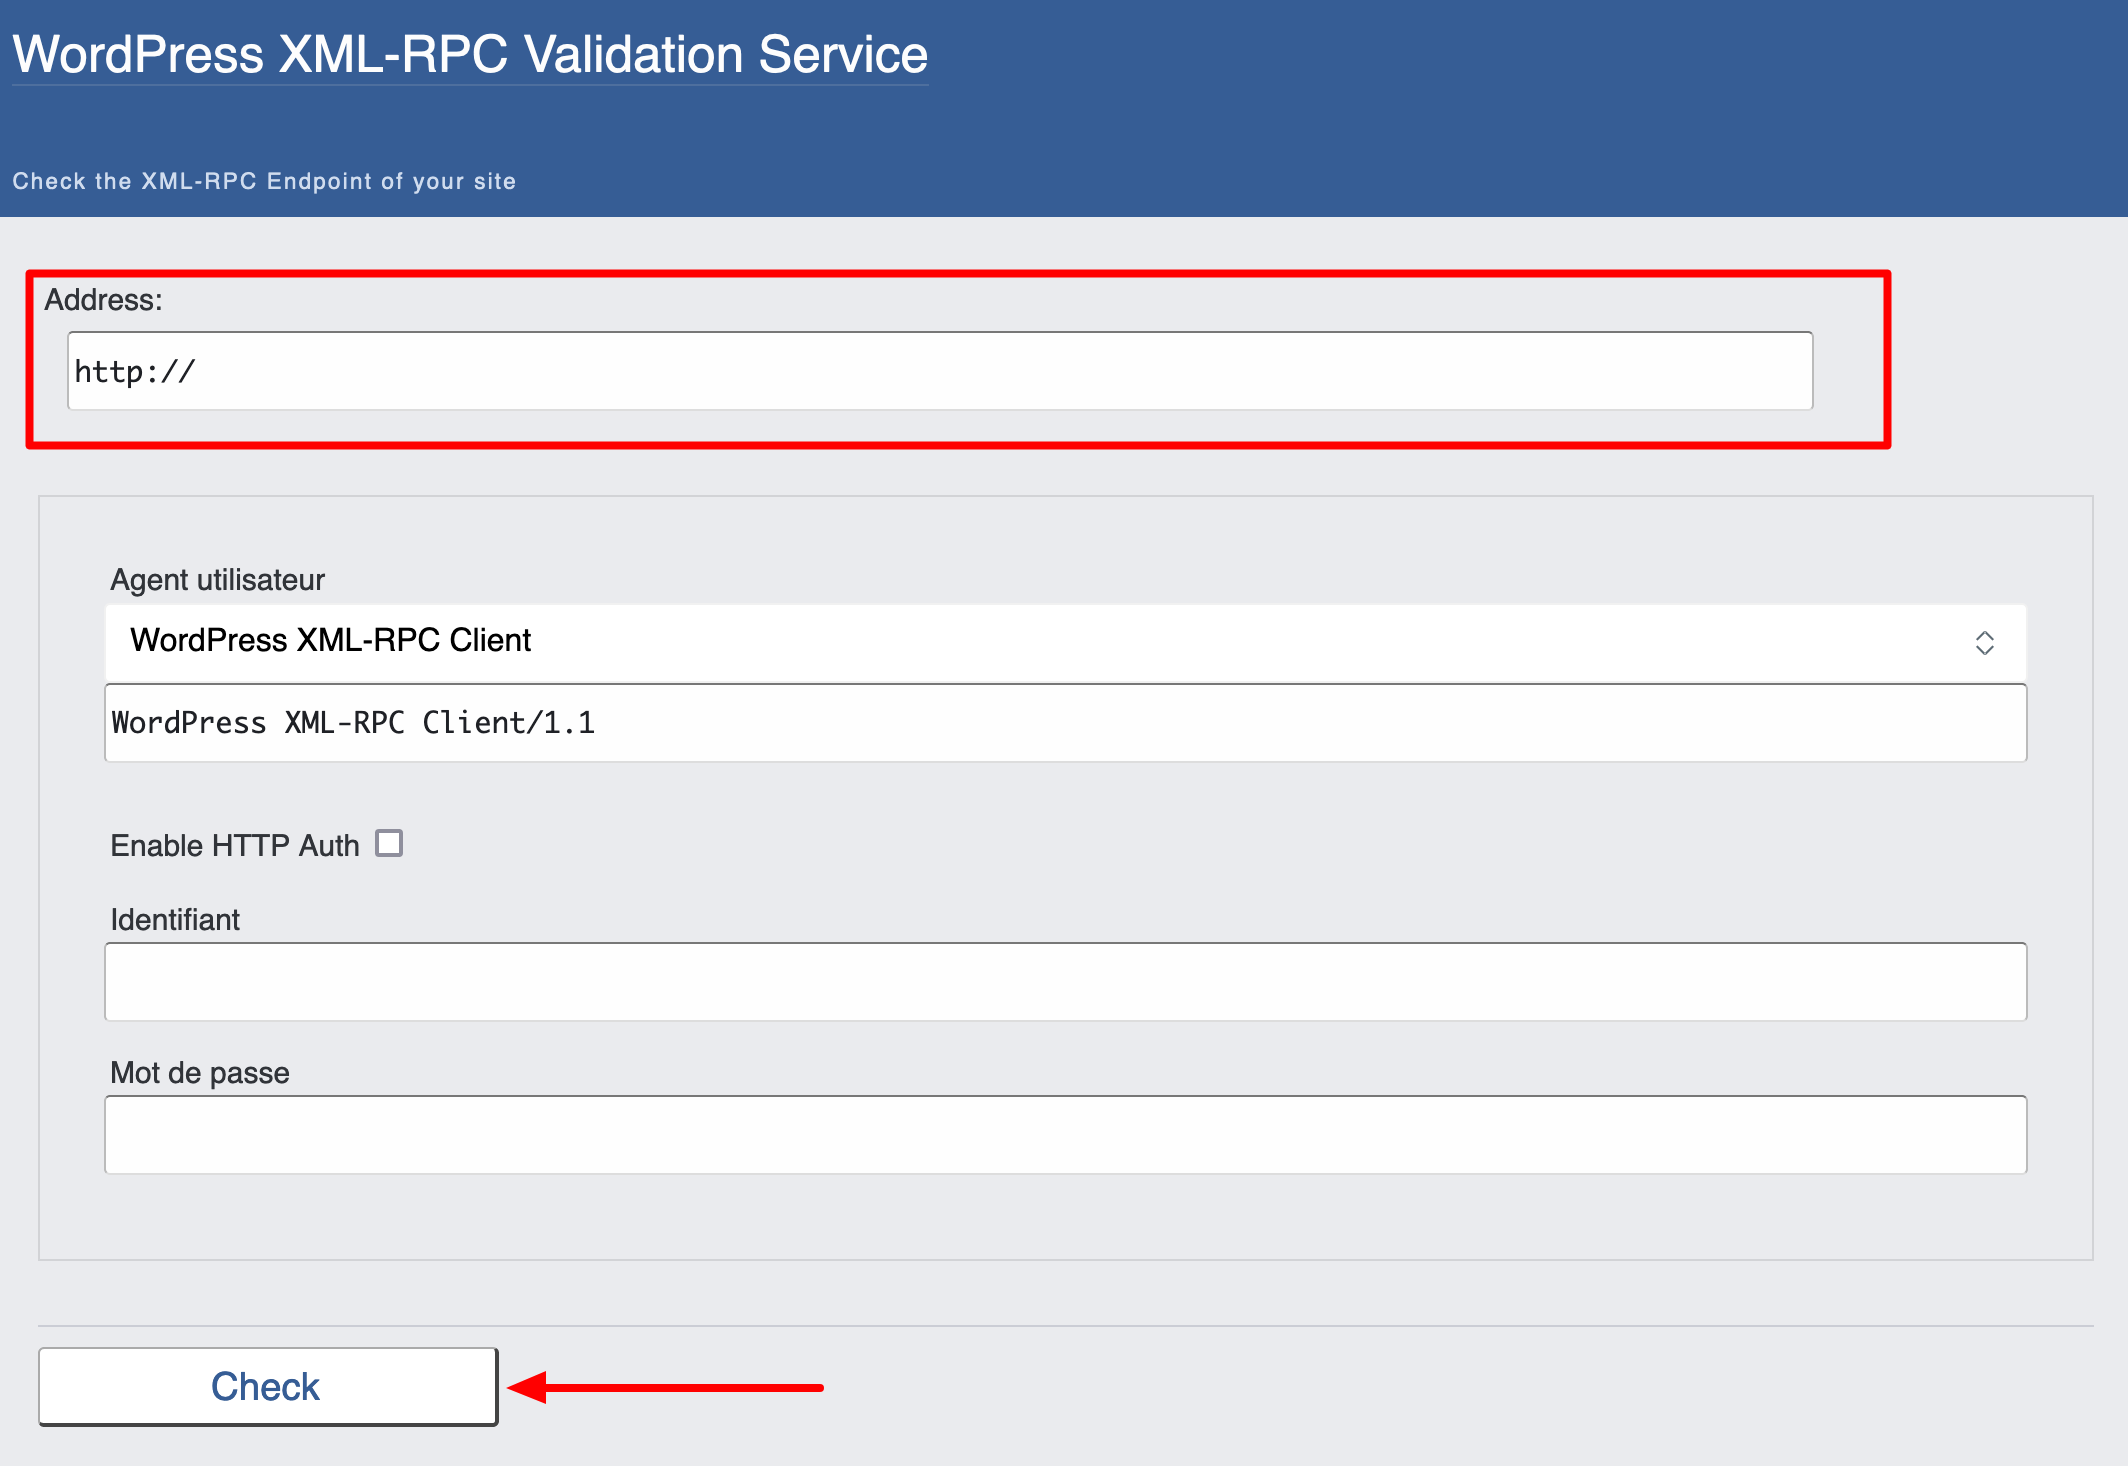 The W3C XML-RPC validation service.